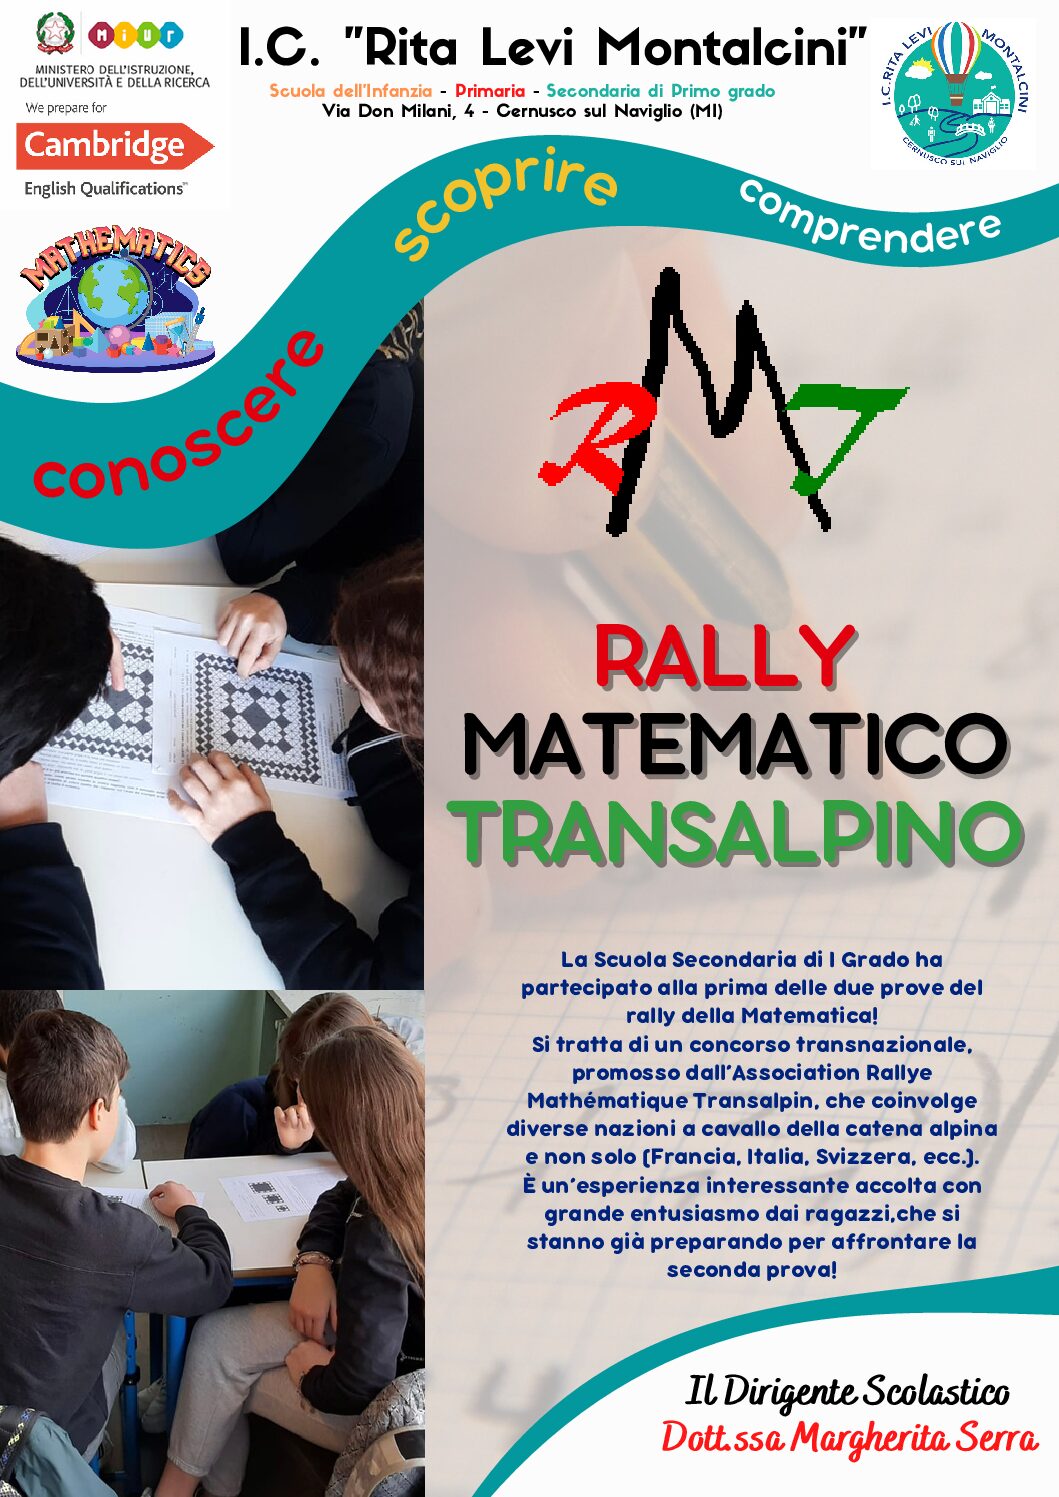 RALLY MATEMATICO TRANSALPINO